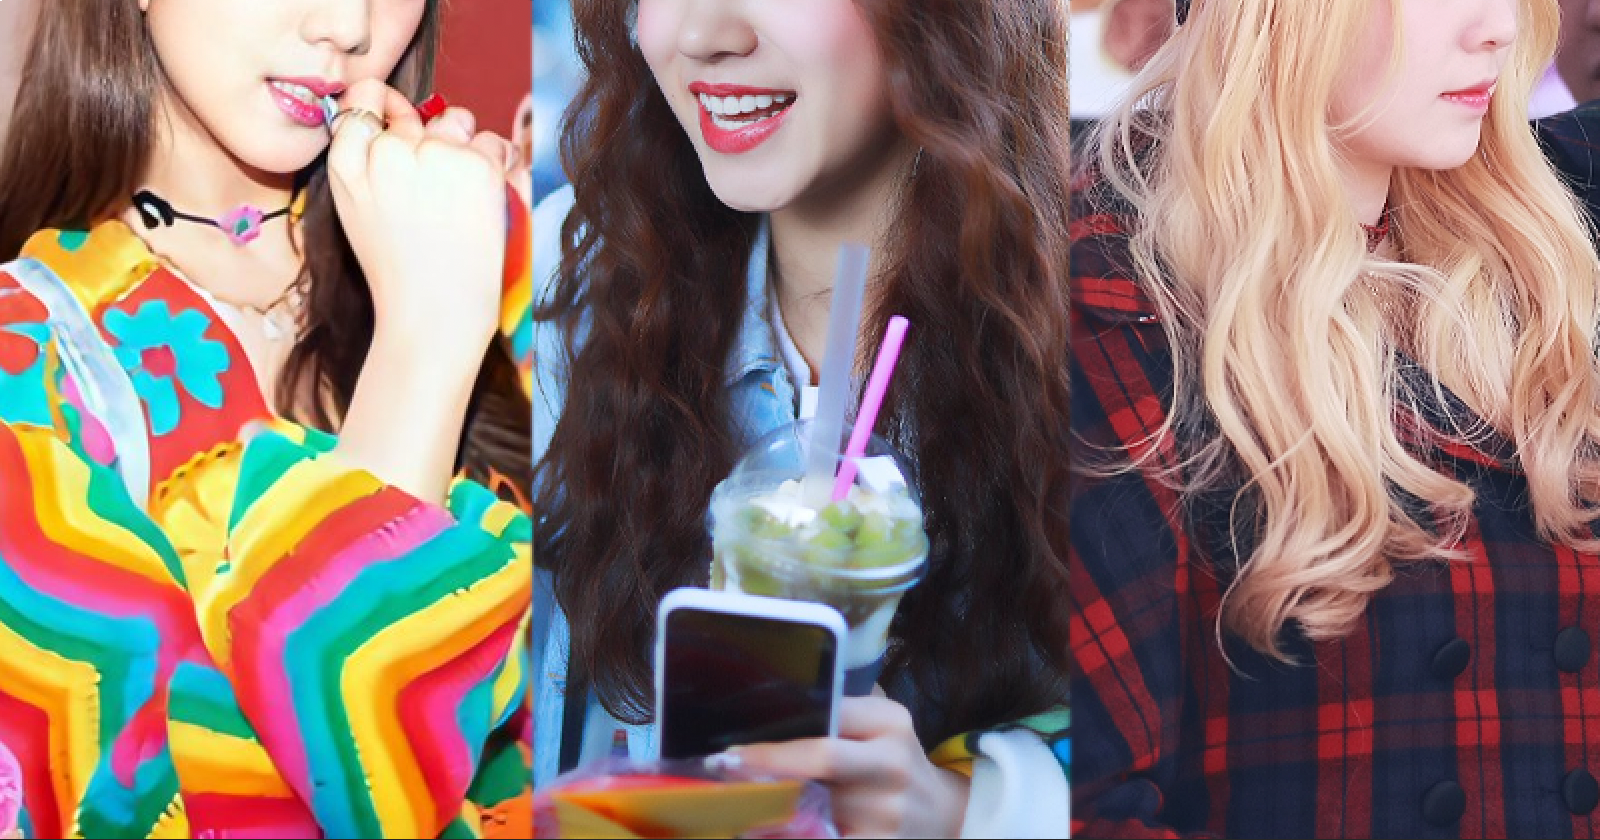 TOP 10 Female Idols Who Could be Ice Cream Brand Ambassador